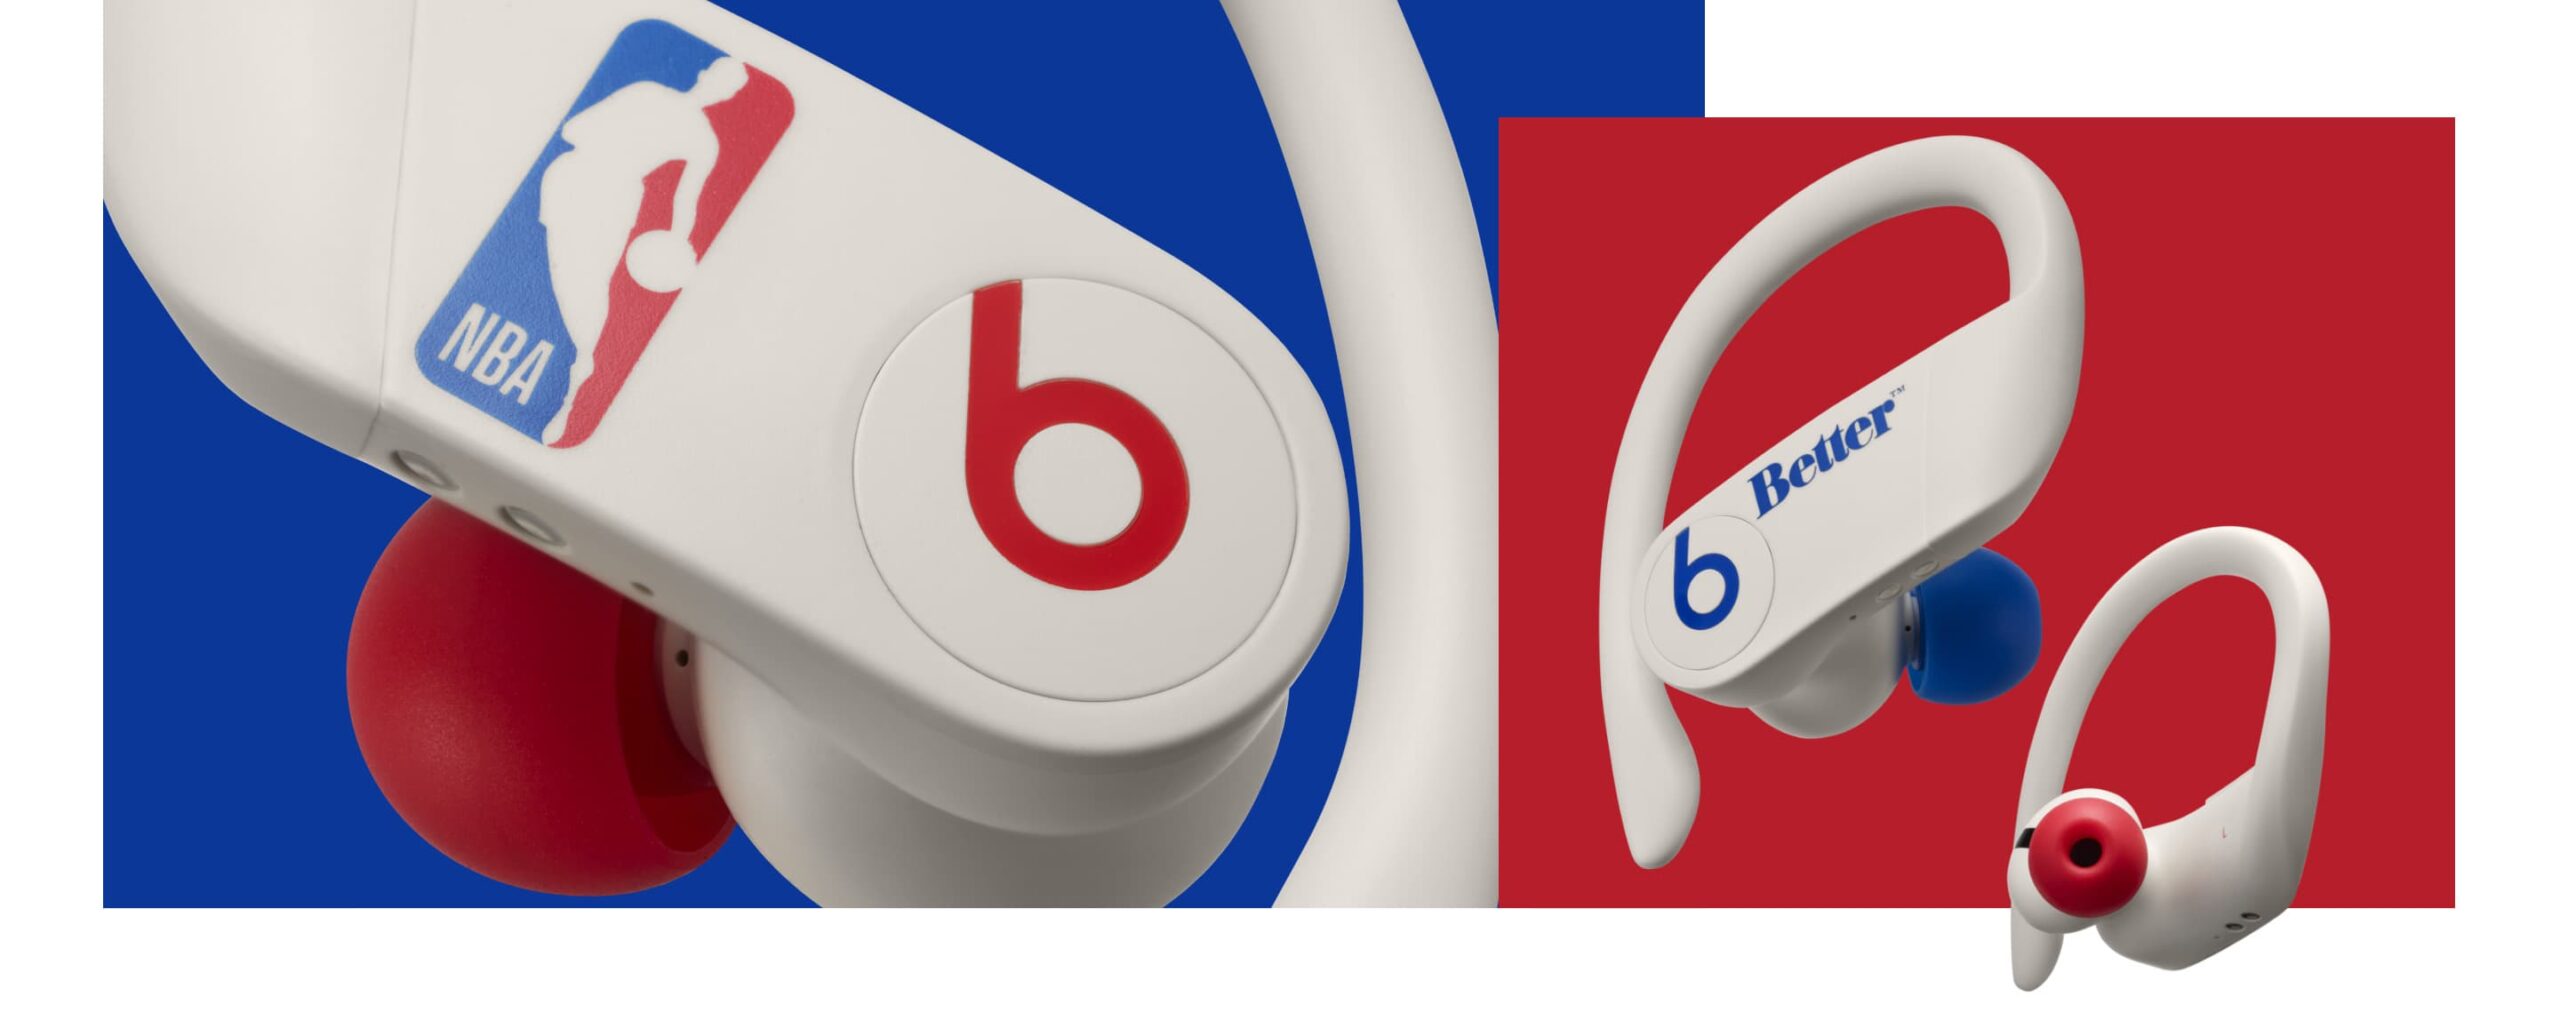 Apple推出限量版NBA Beats Powerbeats Pro 耳機